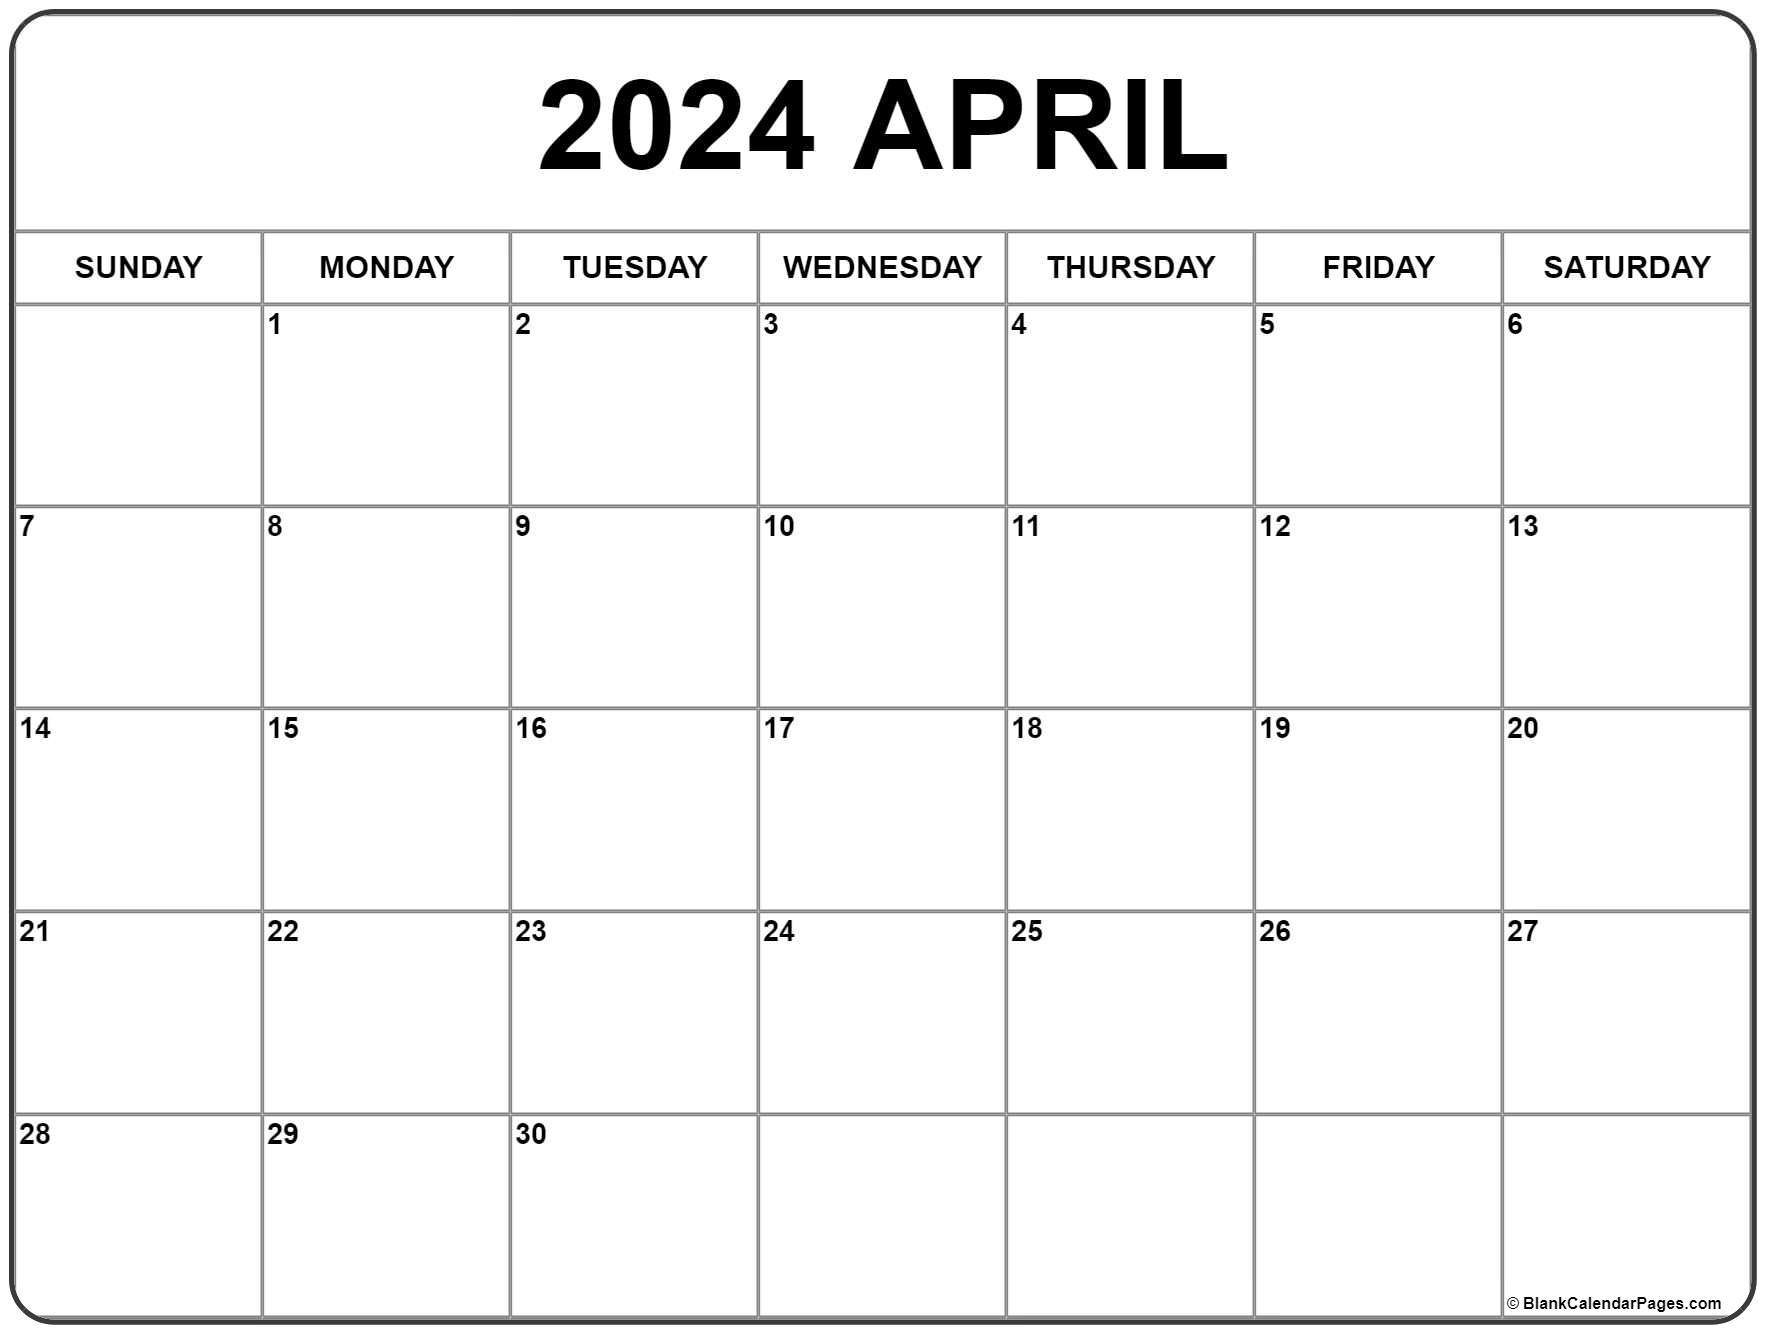 March April Calendar 2022 April 2022 Calendar | Free Printable Calendar Templates